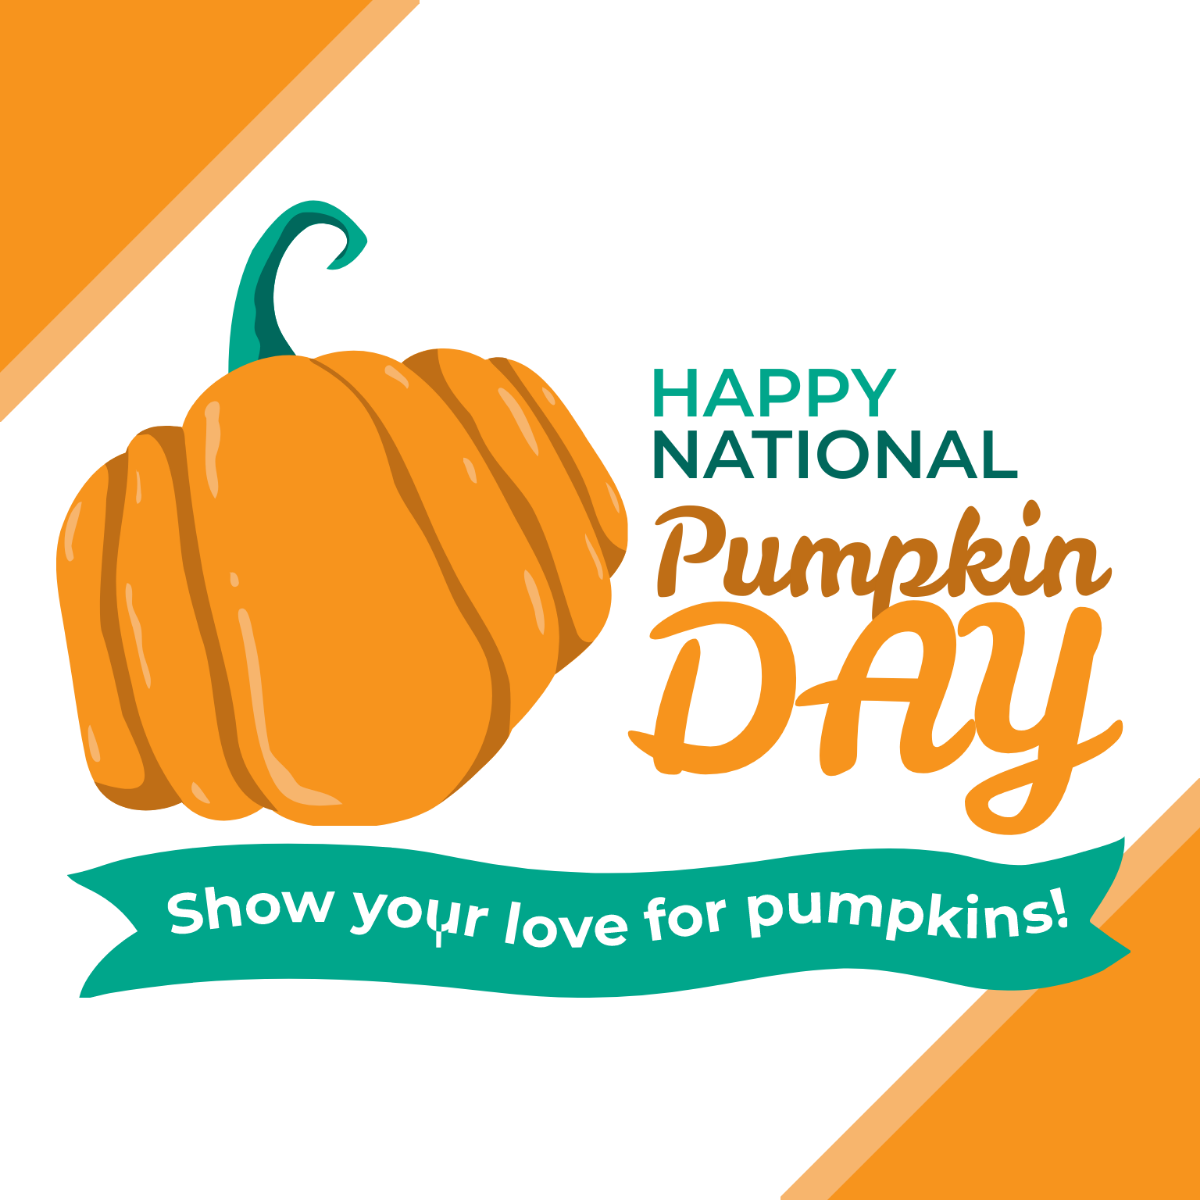 Free National Pumpkin Day Flyer Vector Template